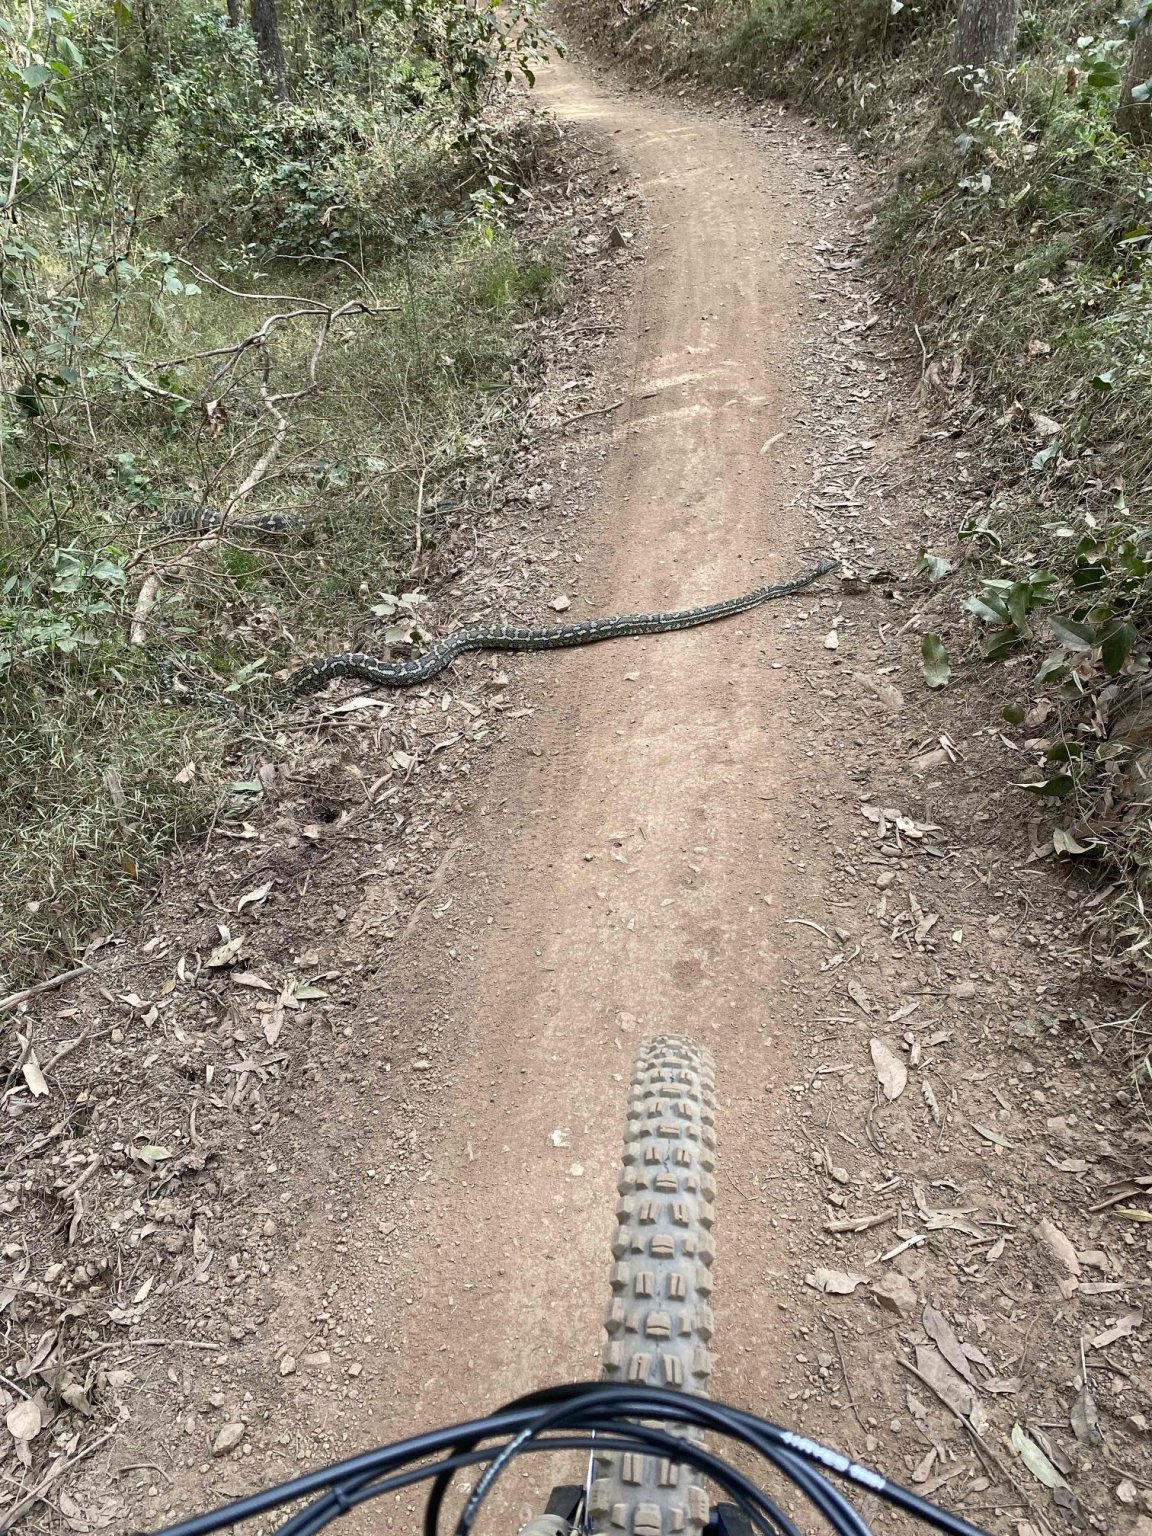 Snake crossing.jpg